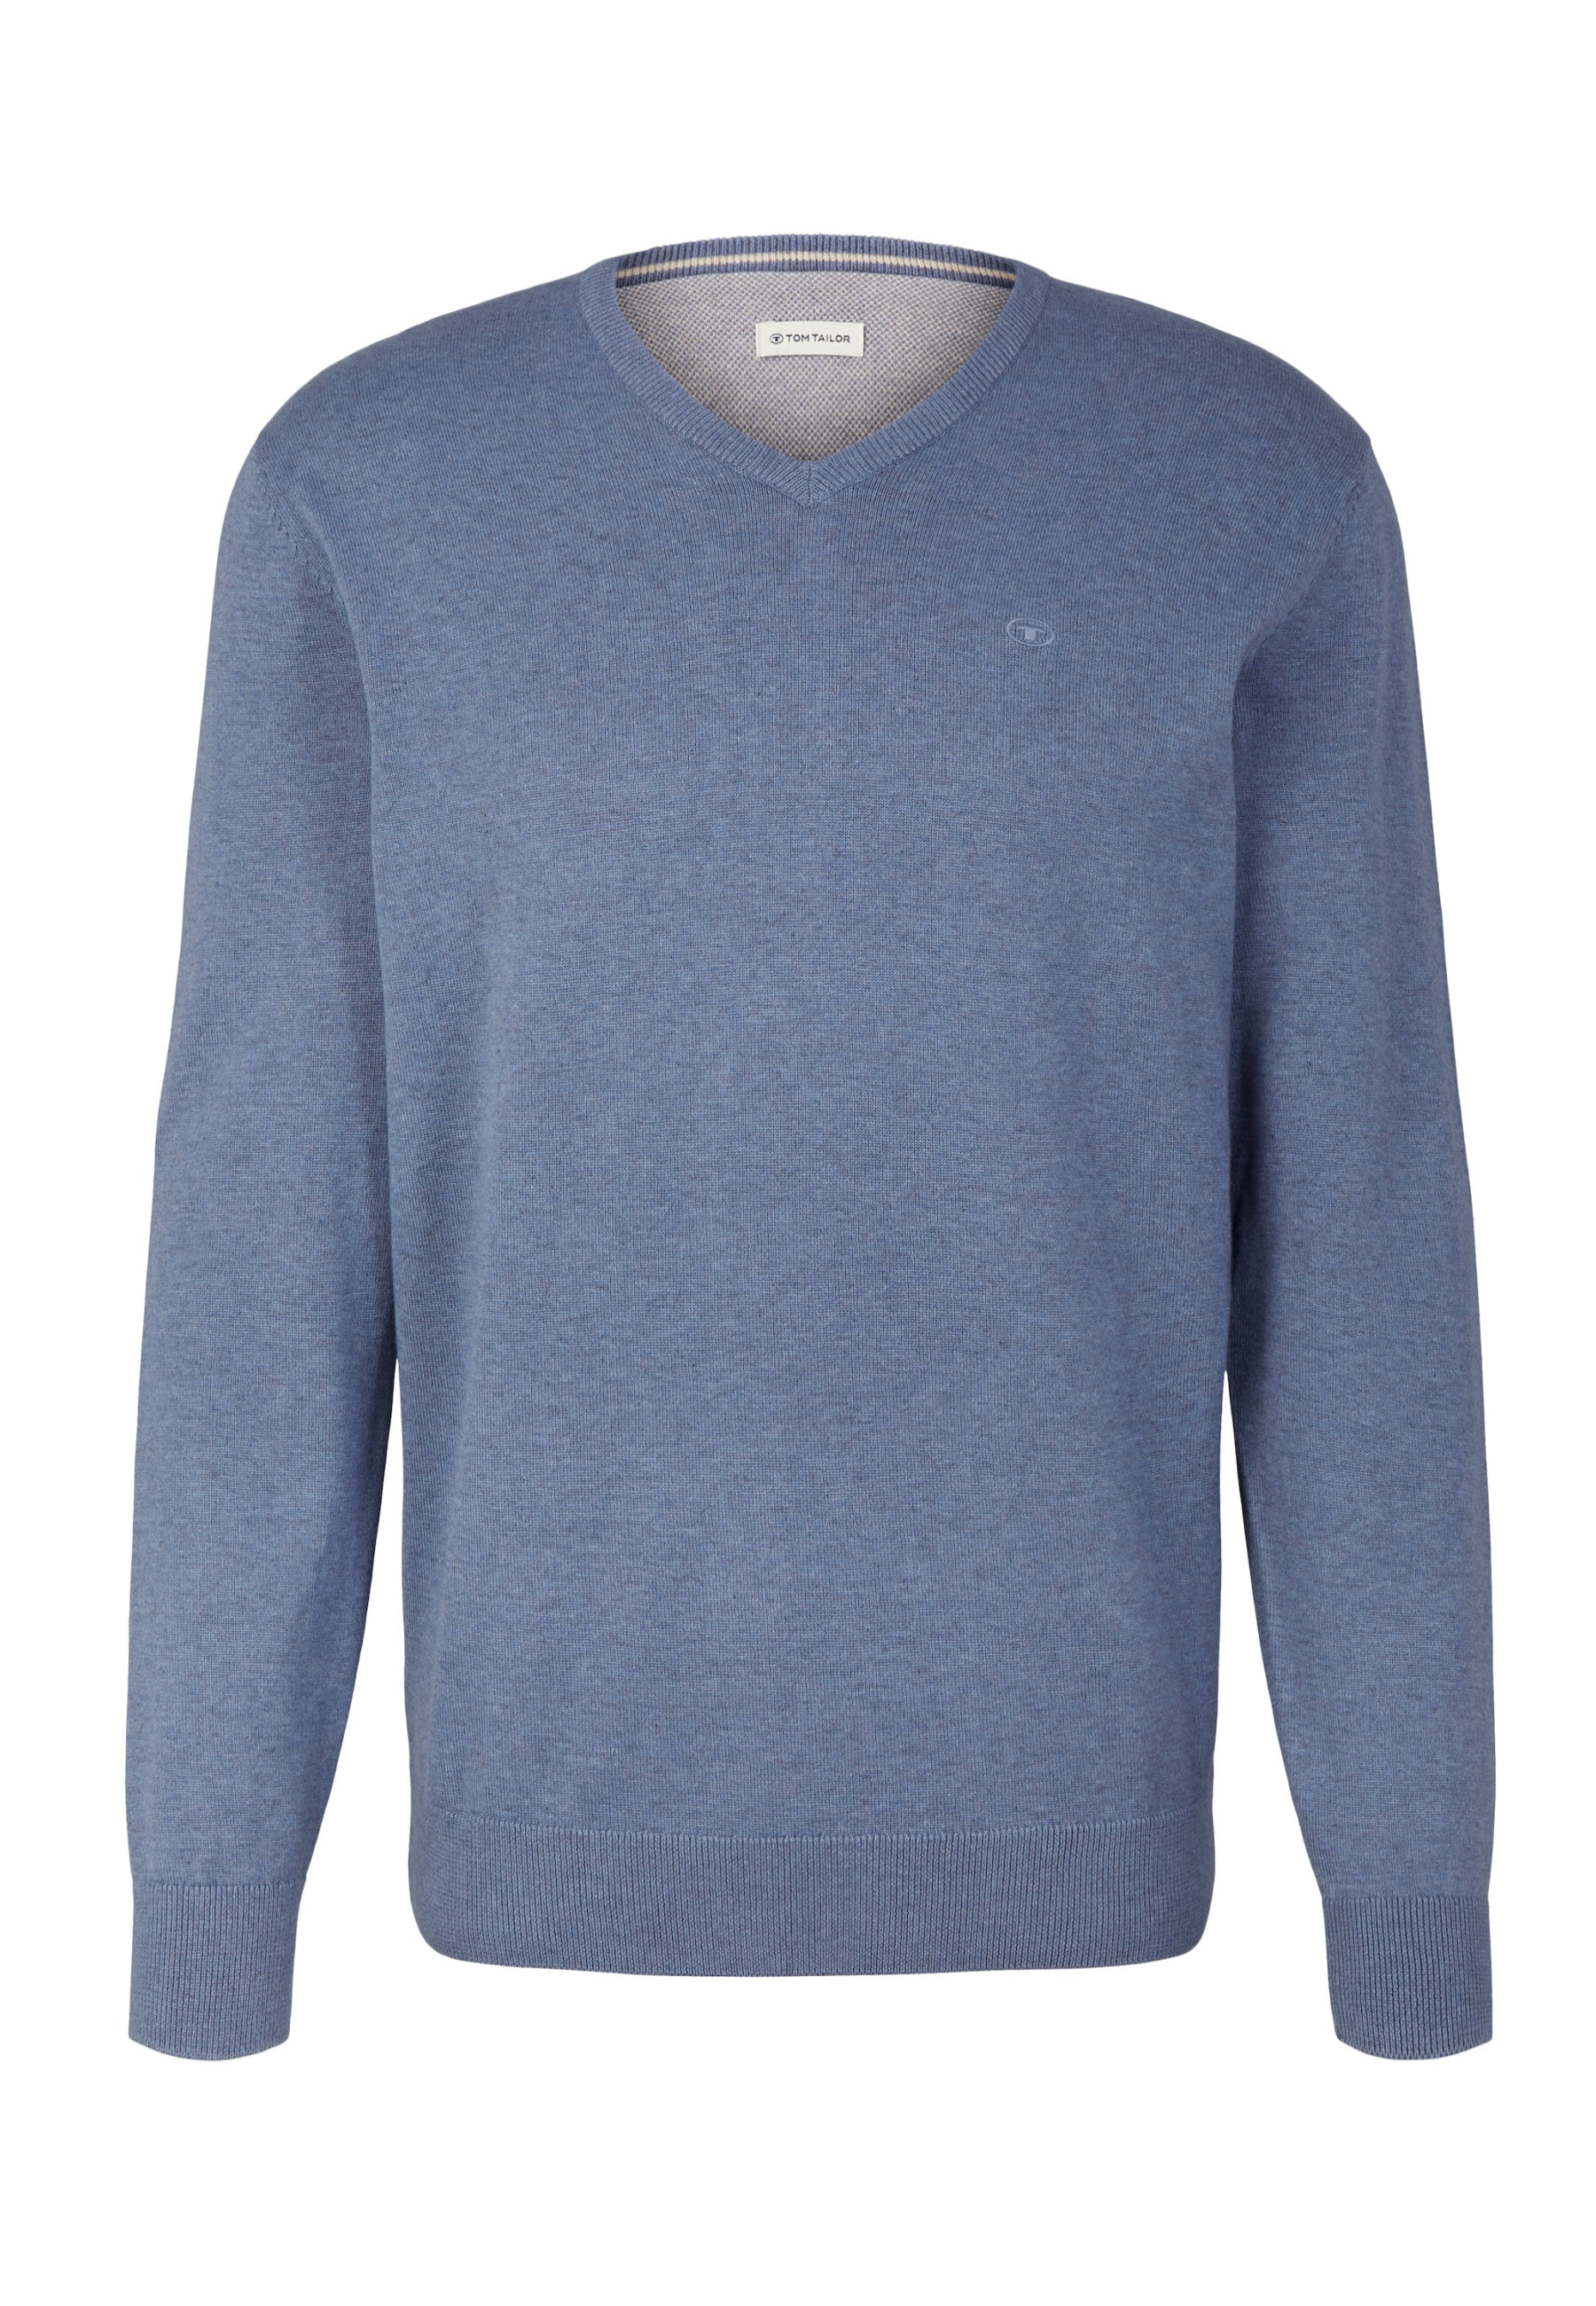 Пуловер Tom Tailor, синий пуловер tom tailor размер l синий